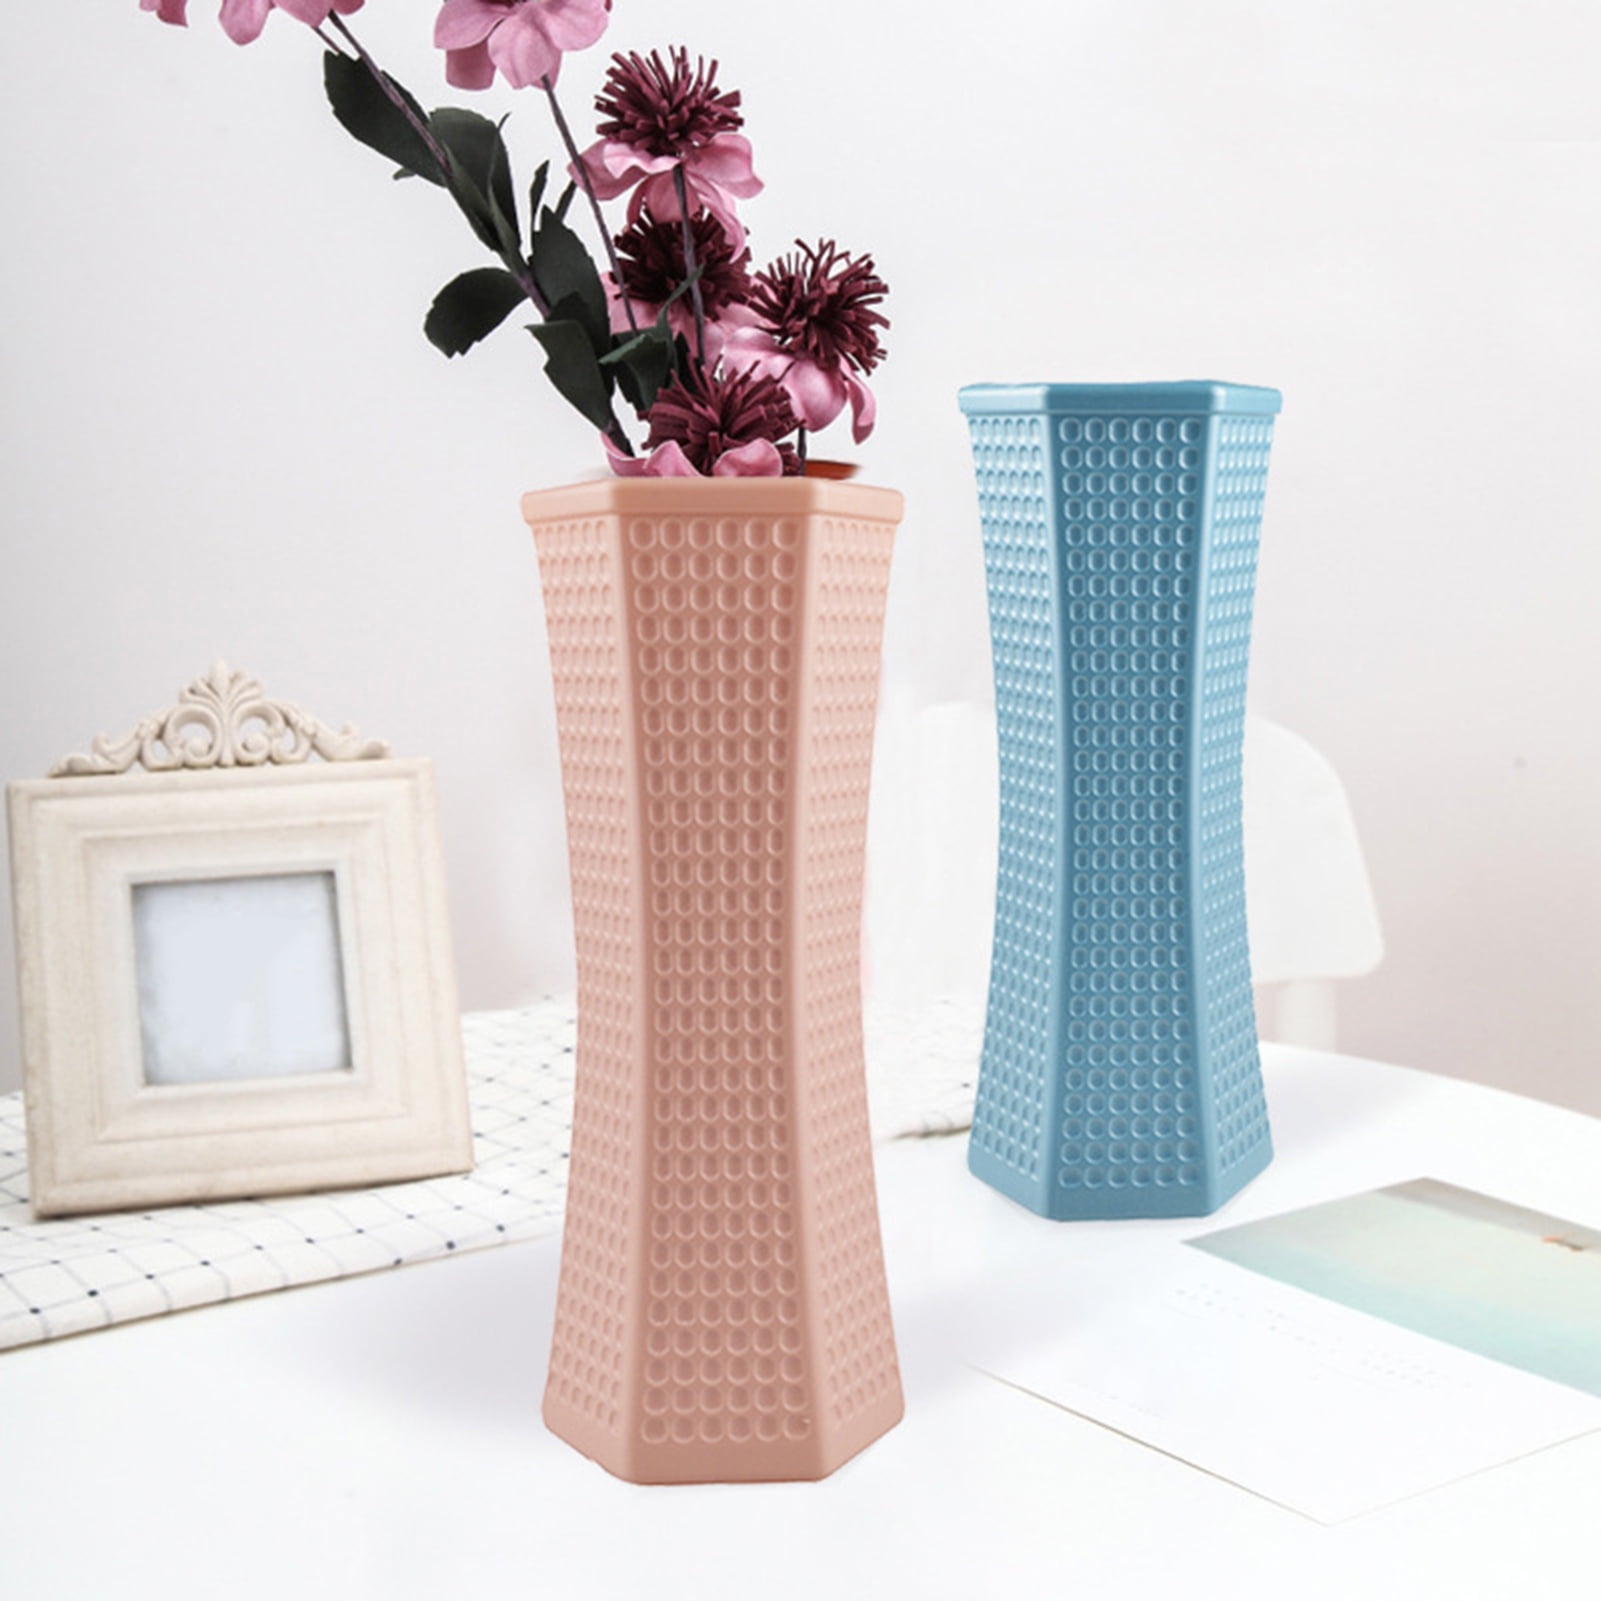 Details about   Nordic Flower Pot Vase Ceramic Vases Bedroom Study Home Wedding Table Decoration 